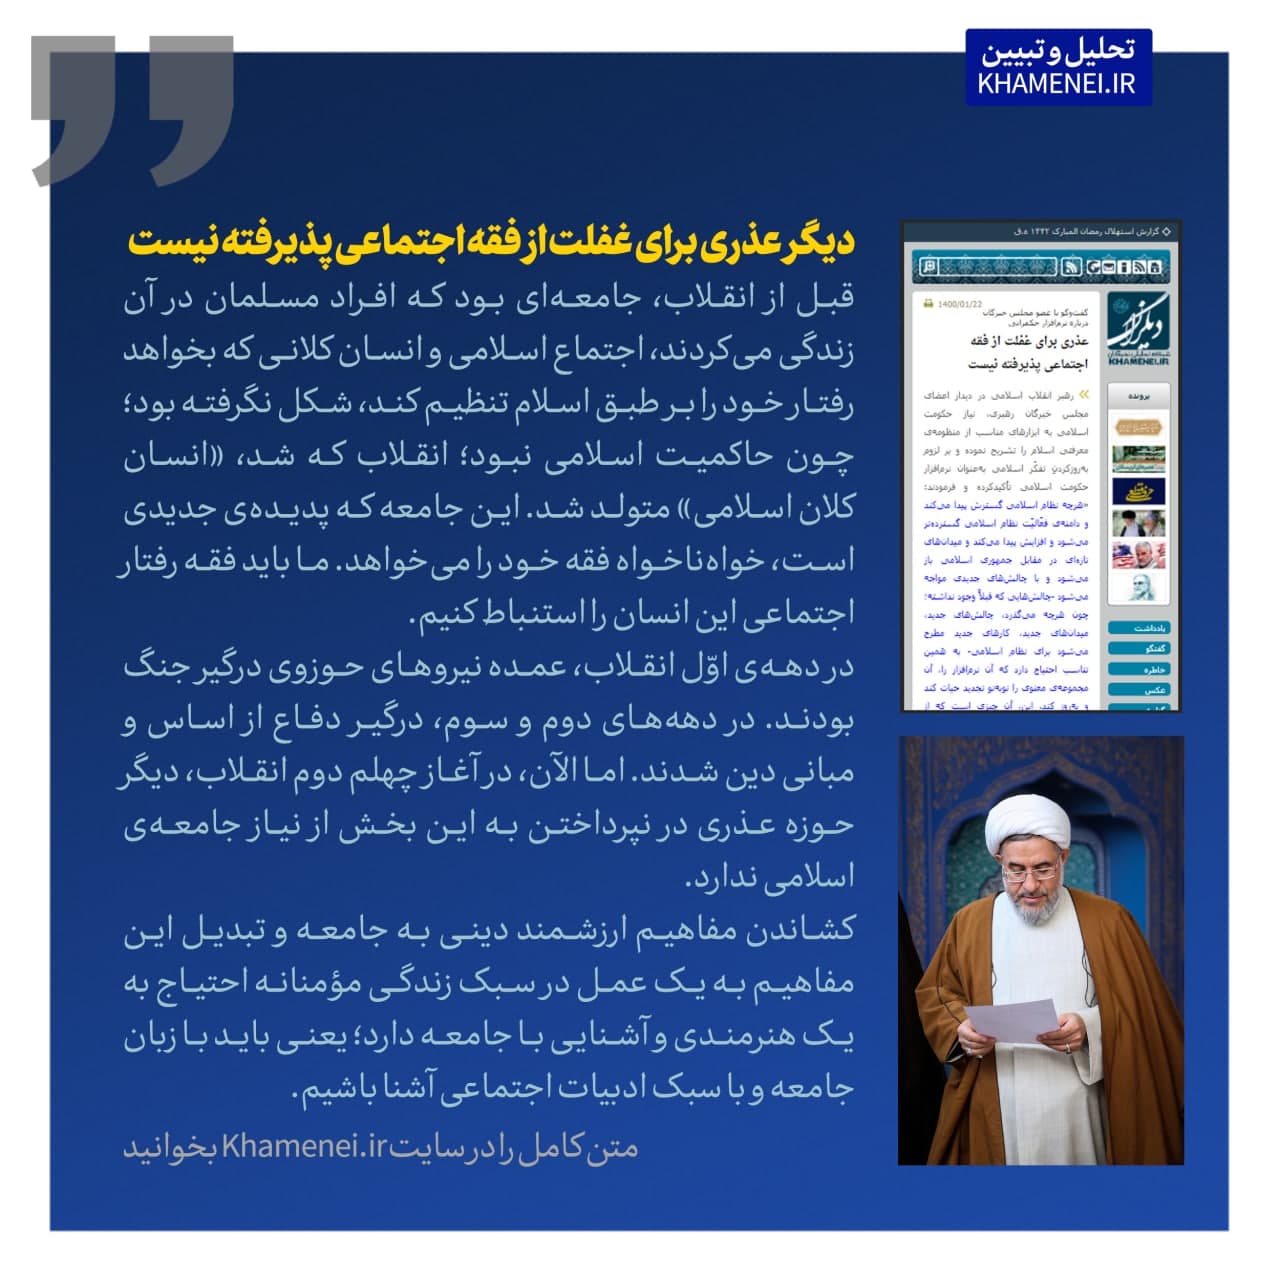 https://idc0-cdn0.khamenei.ir/ndata/news/47679/photo_2021-04-14_05-52-17.jpg